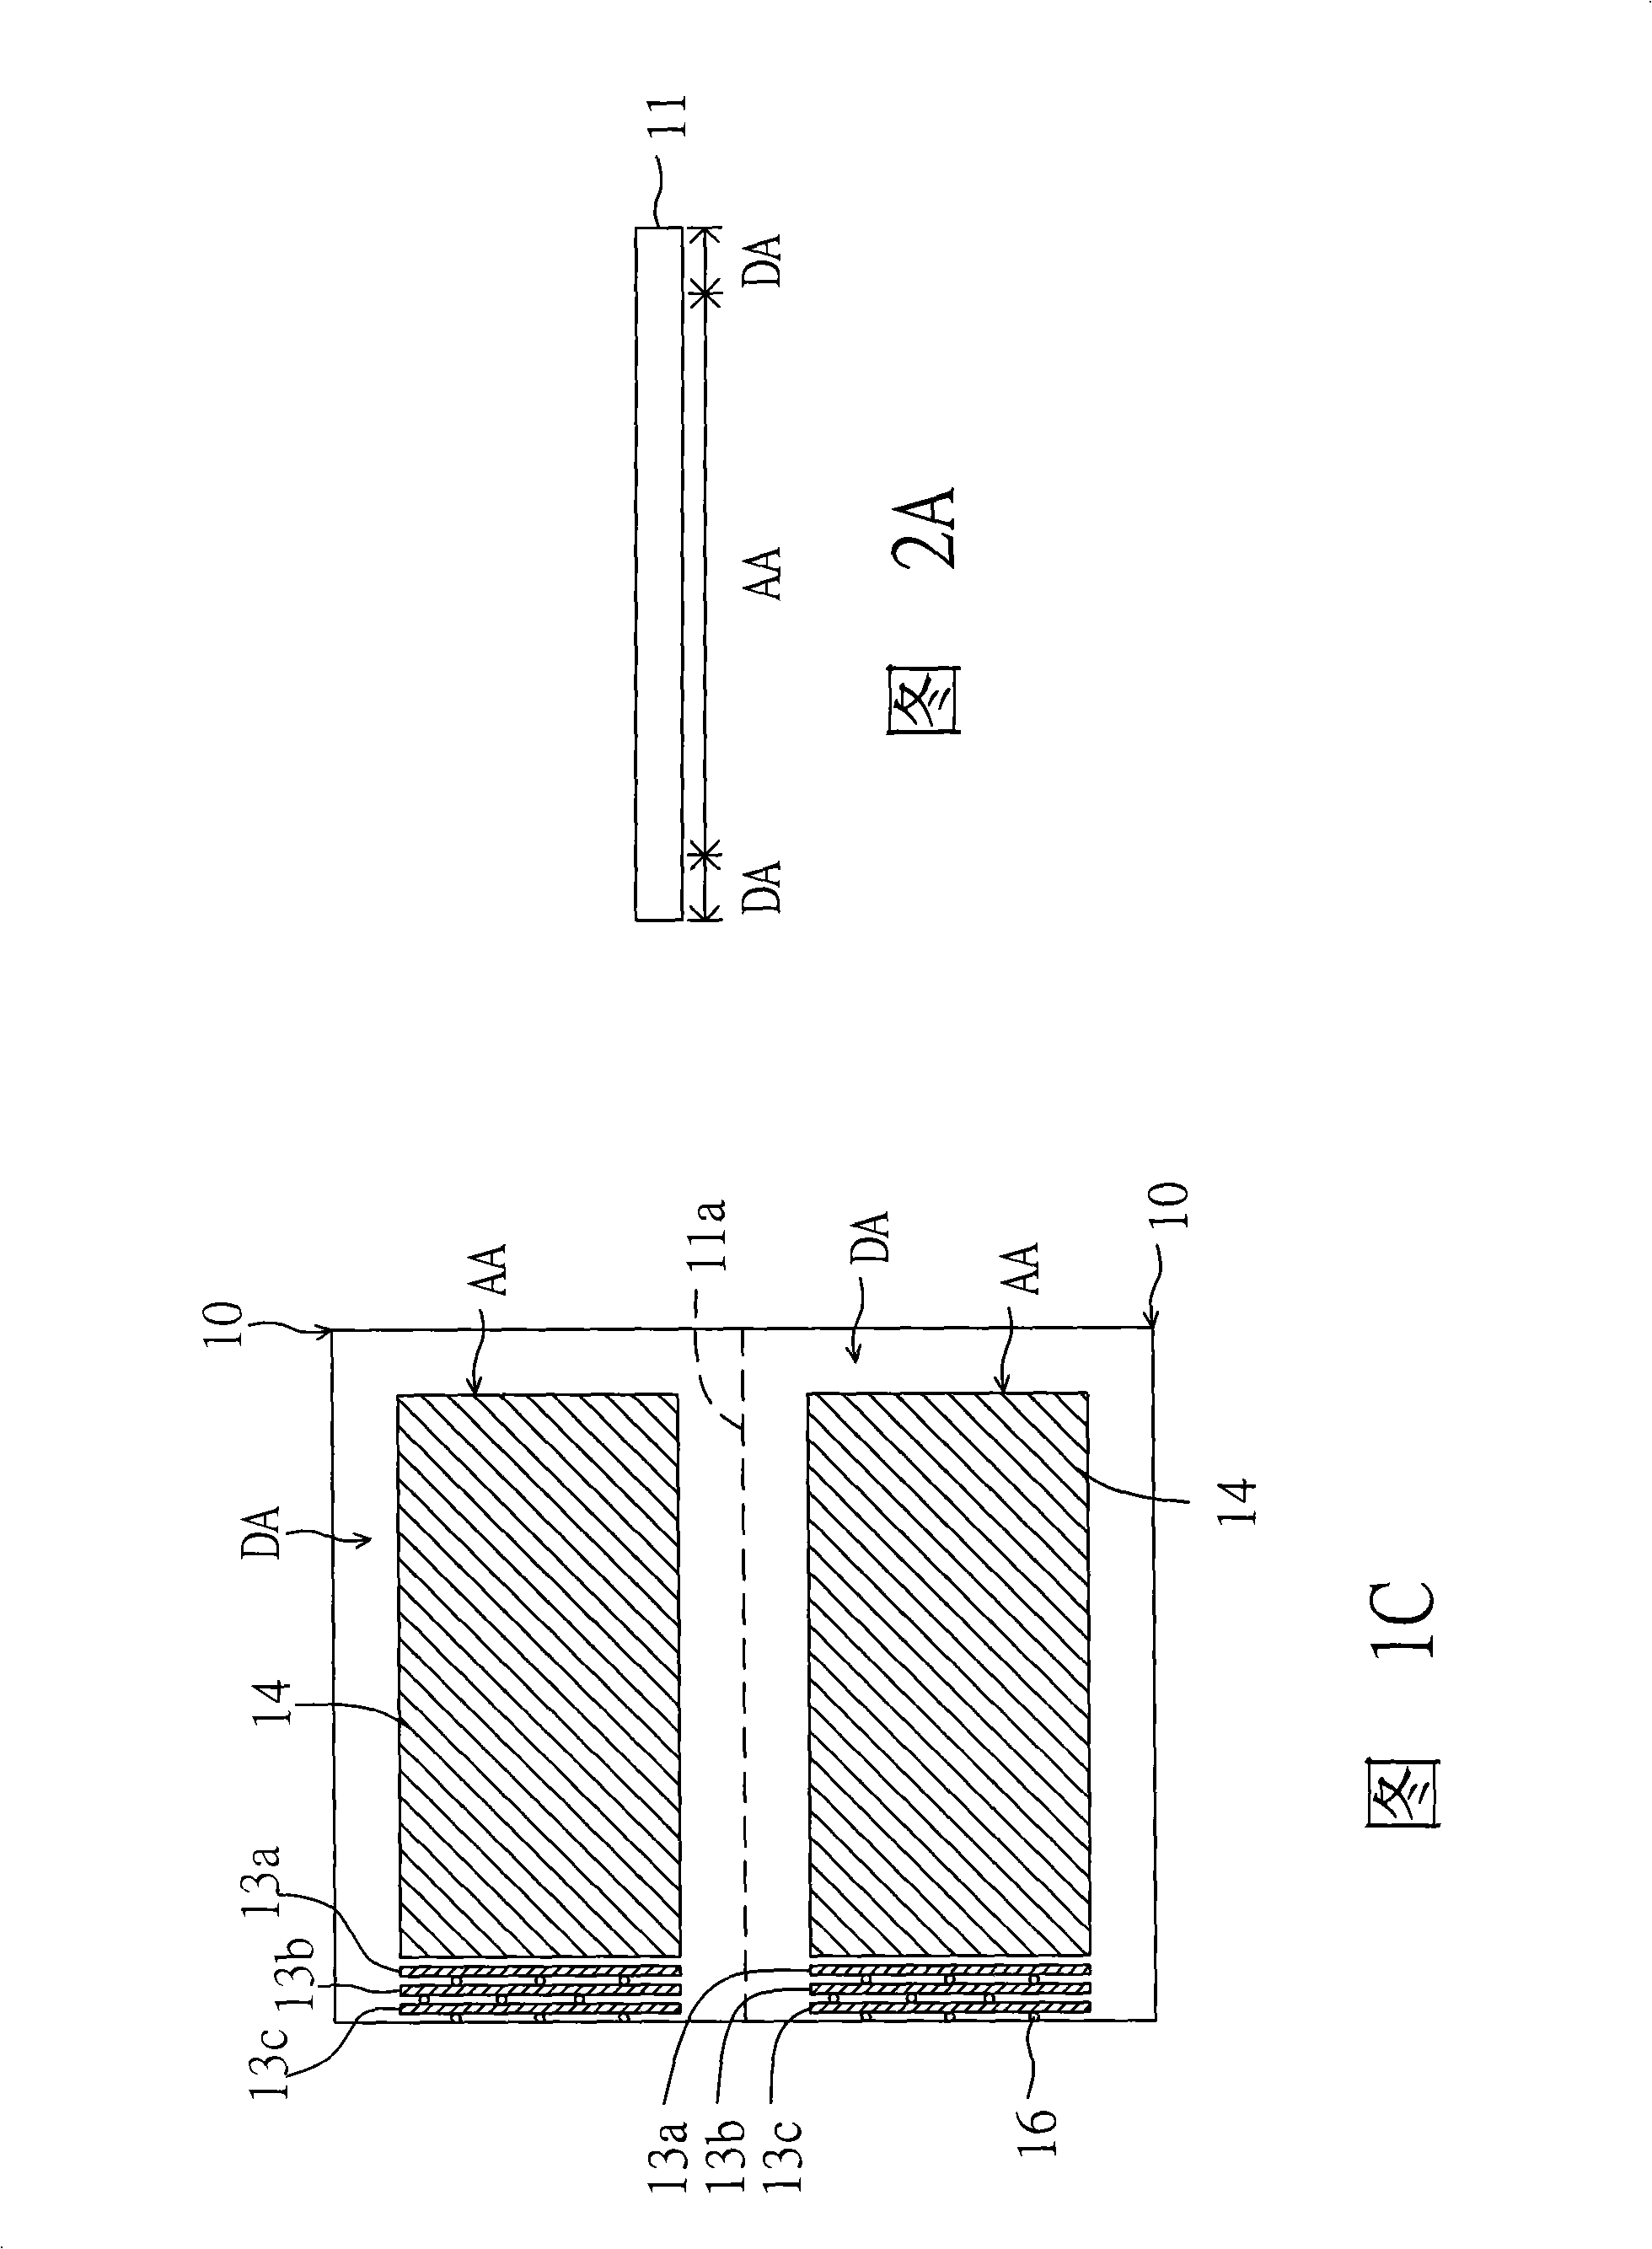 Liquid crystal display panel and its substrate preparation method